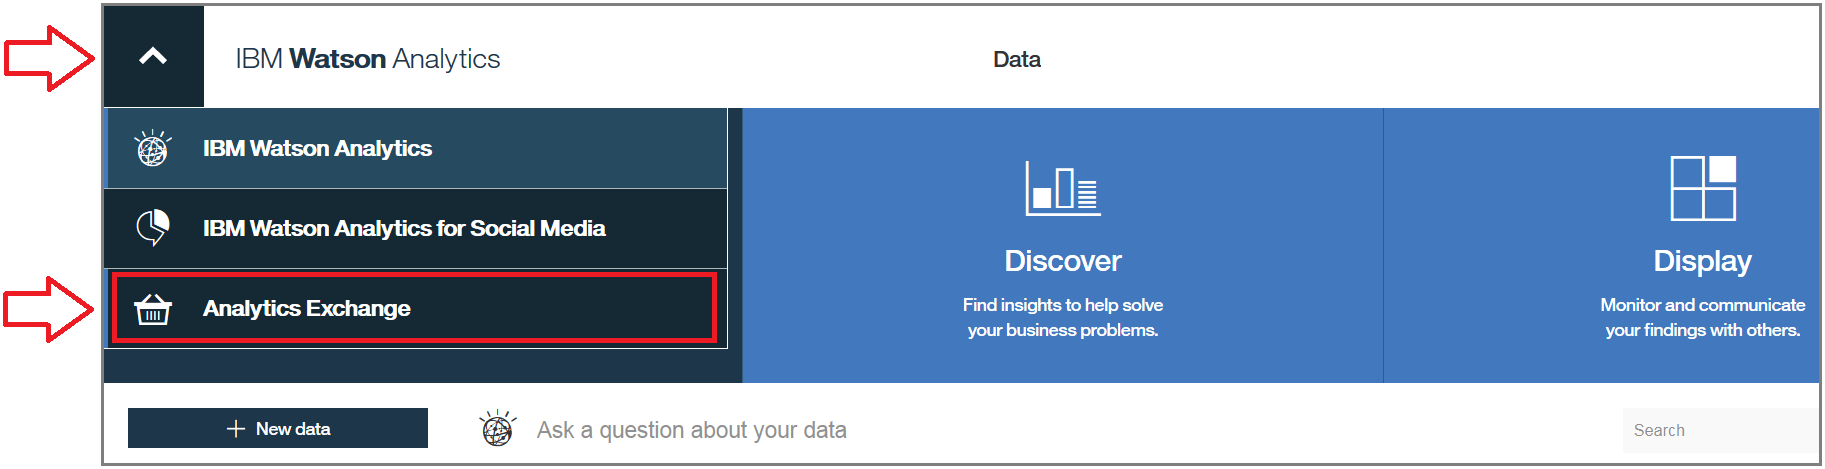 IBM Watson Analytics Logo - Data, Discover and Display